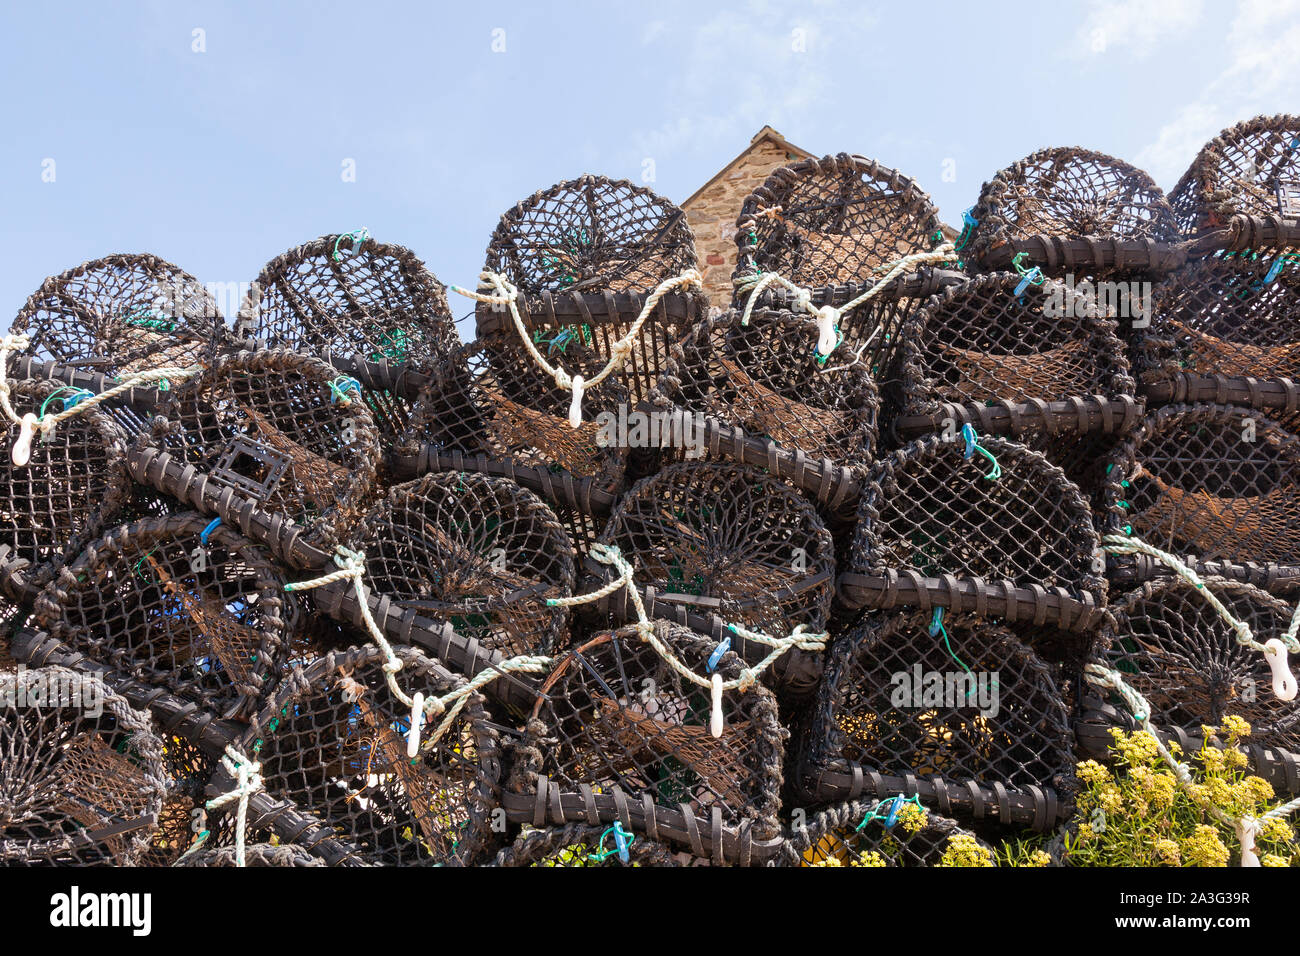 Lobster pots or traps at Hope Cove, Kingsbridge, Devon, England, United Kingdom. Stock Photo